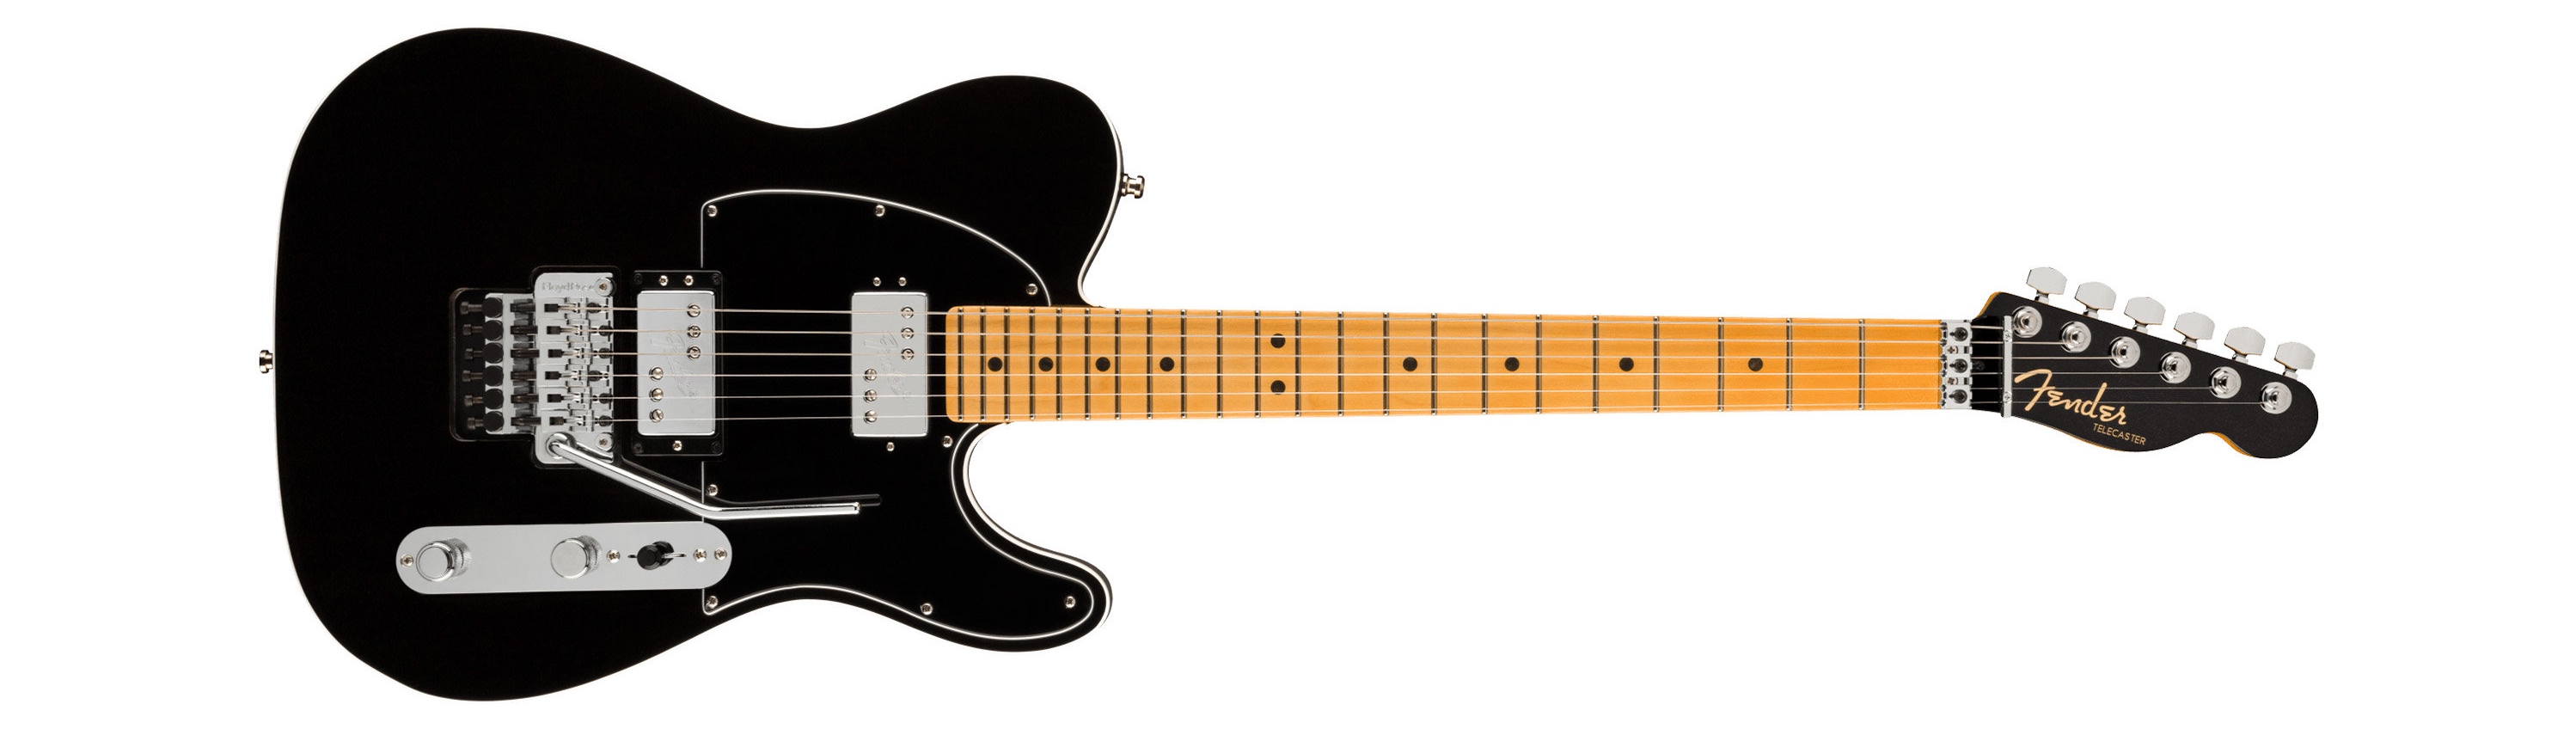 Fender Ultra Luxe Tele Floyd rose